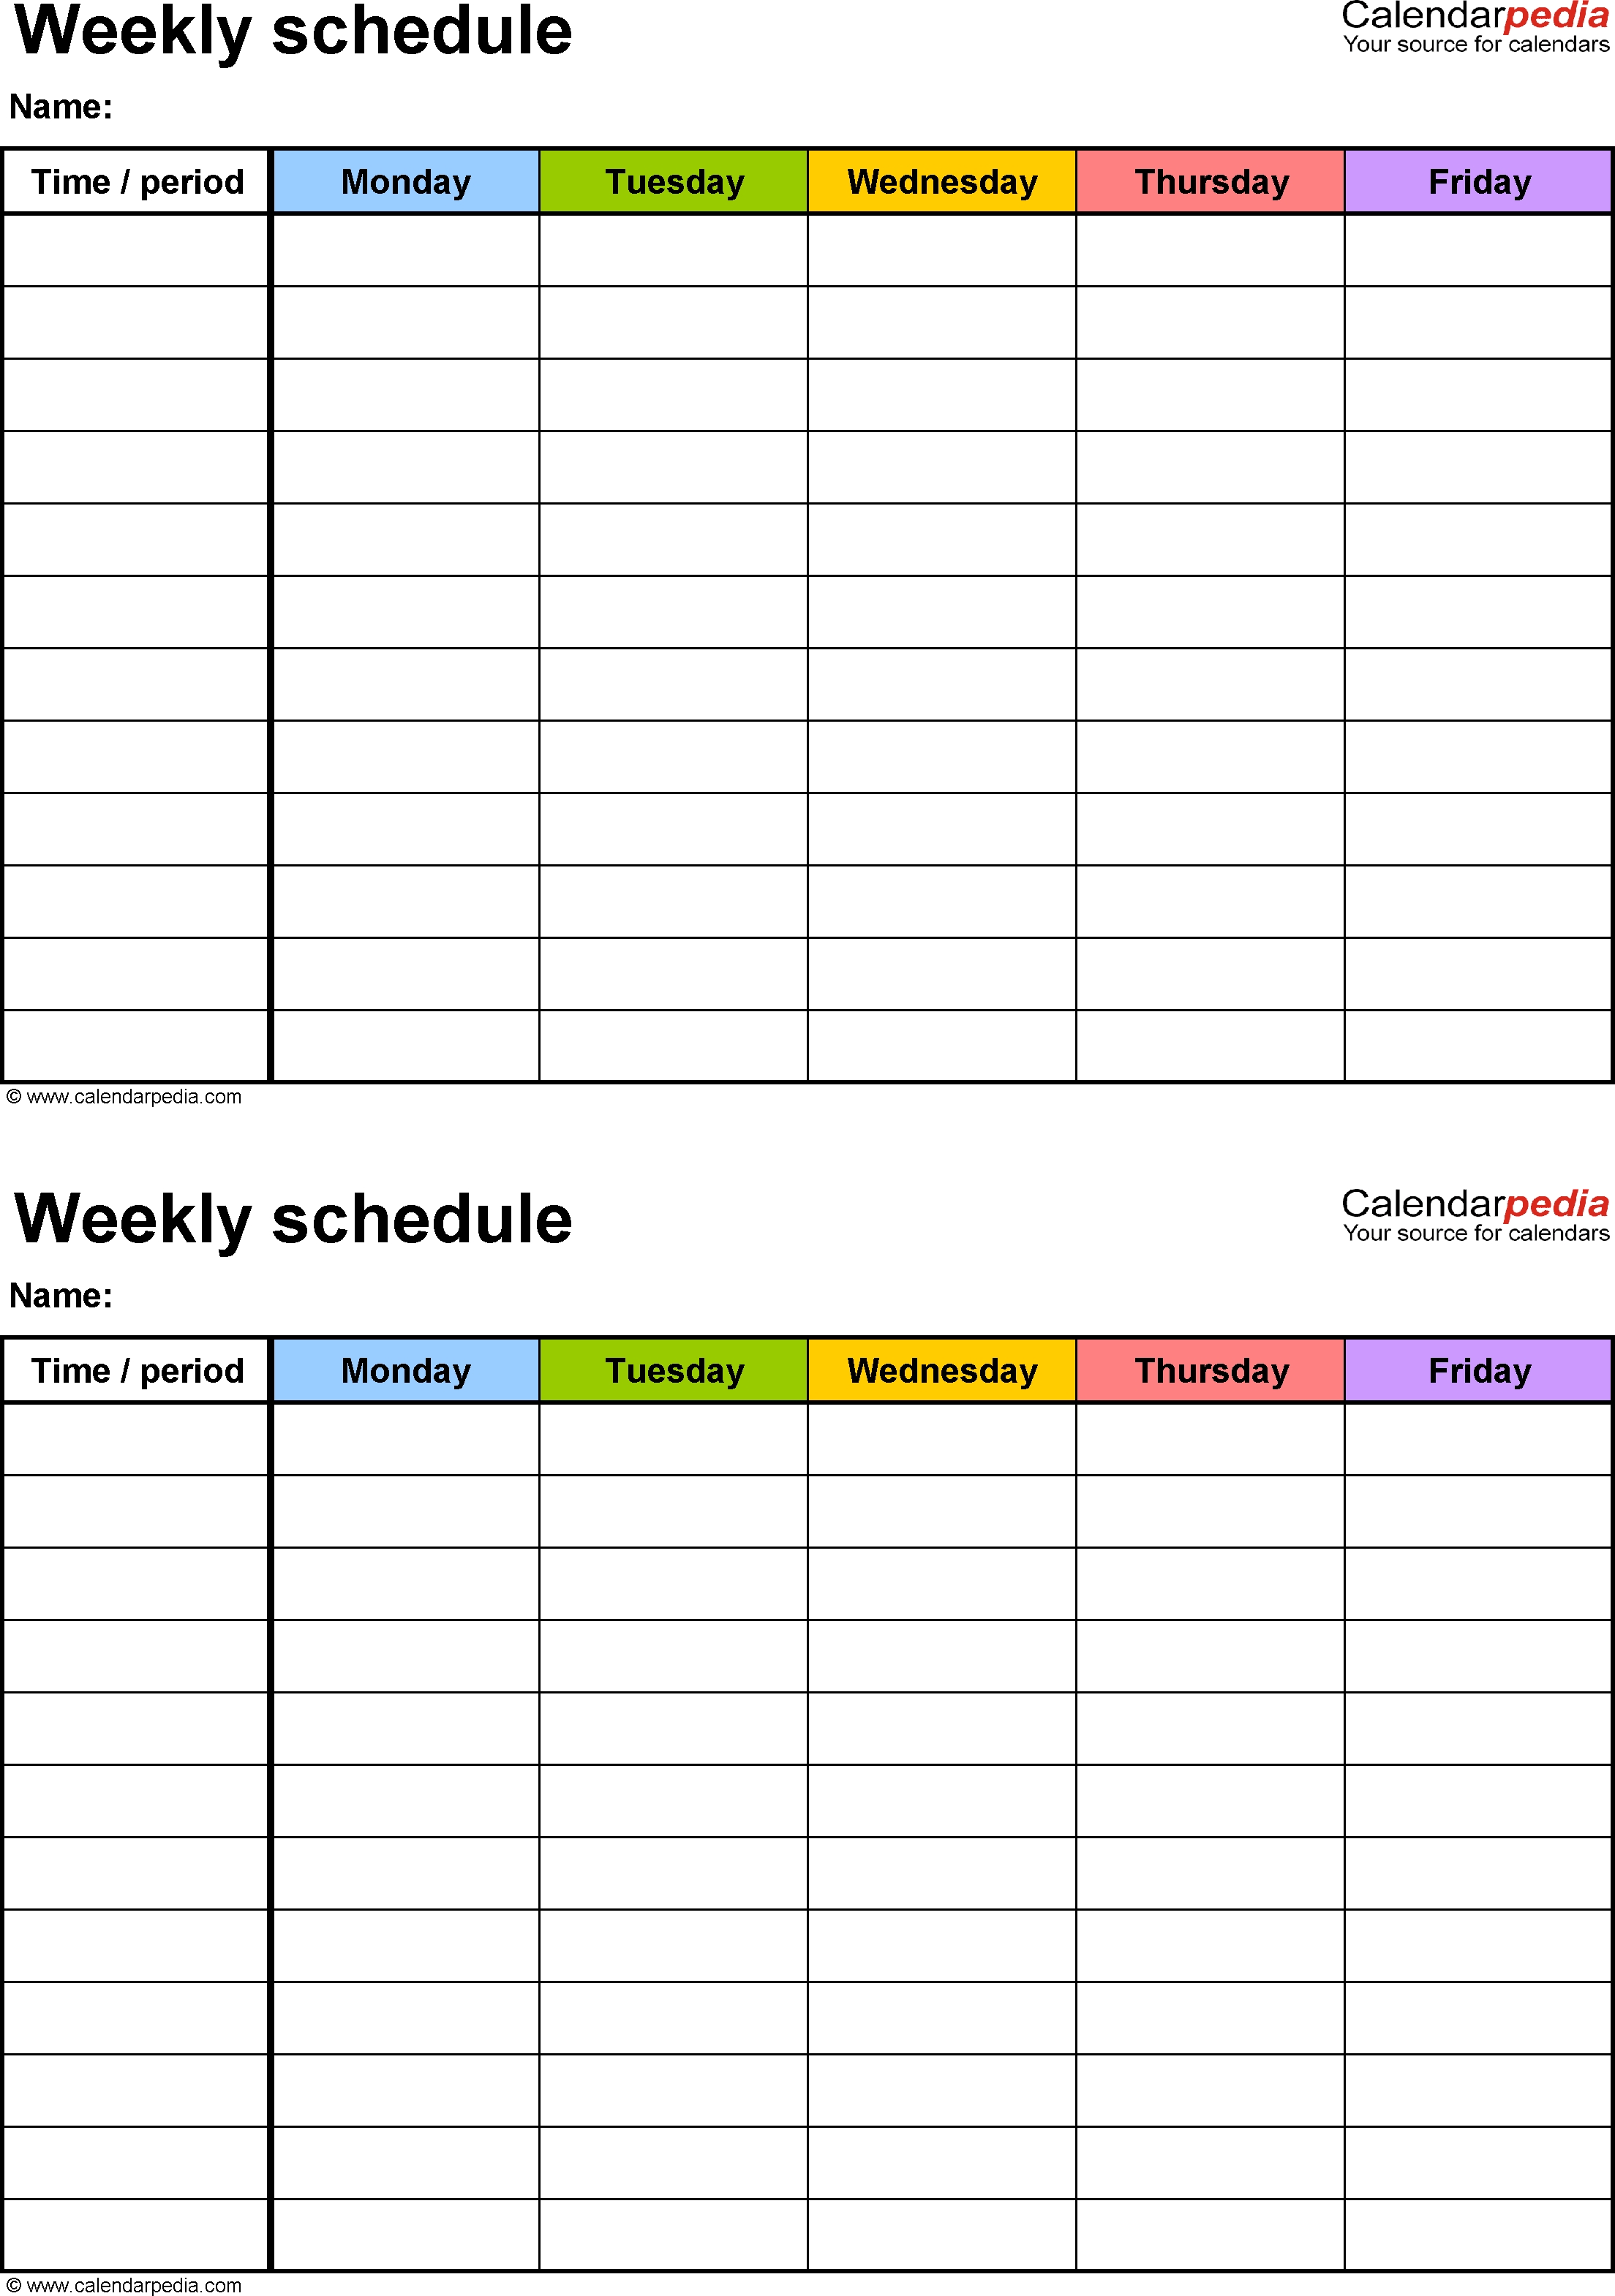 Free Weekly Schedule Templates For Word - 18 Templates Perky 2 Week Calendar Blank